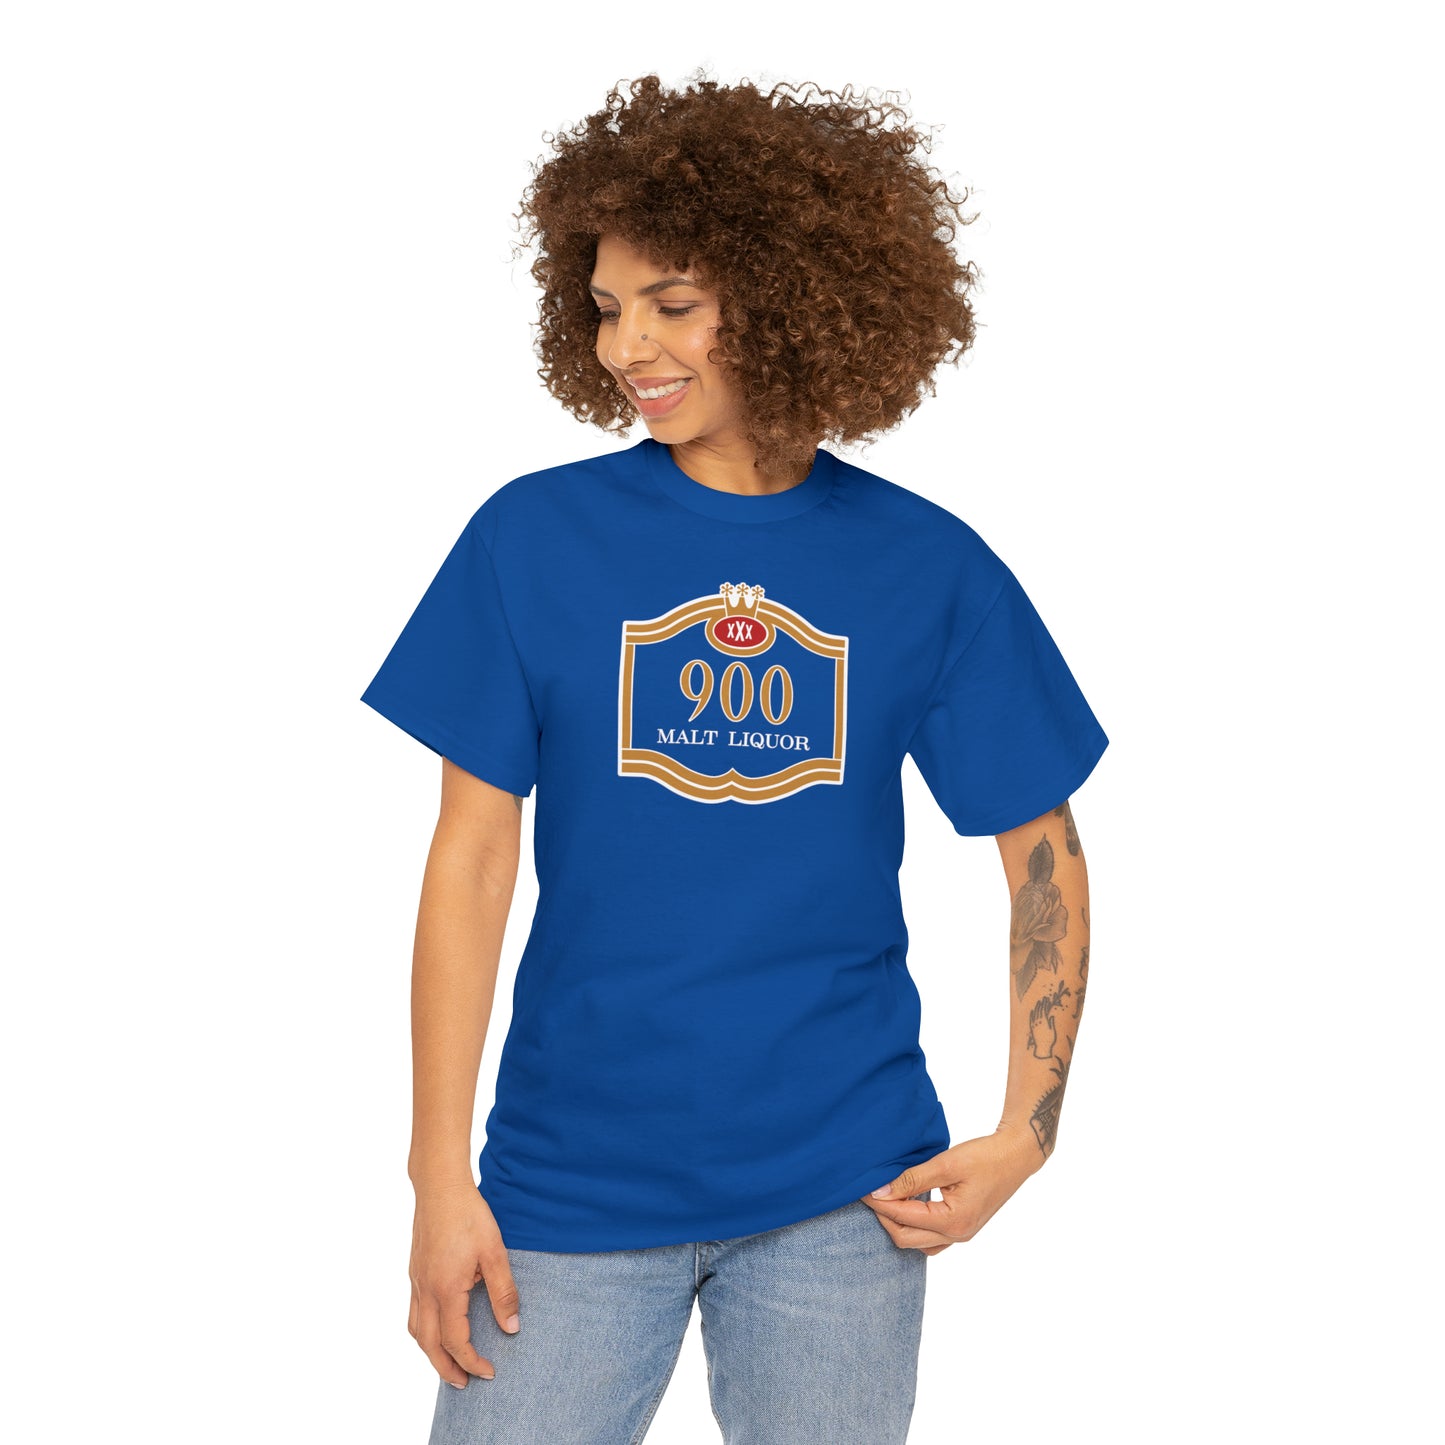 900 Malt Liquor T-Shirt